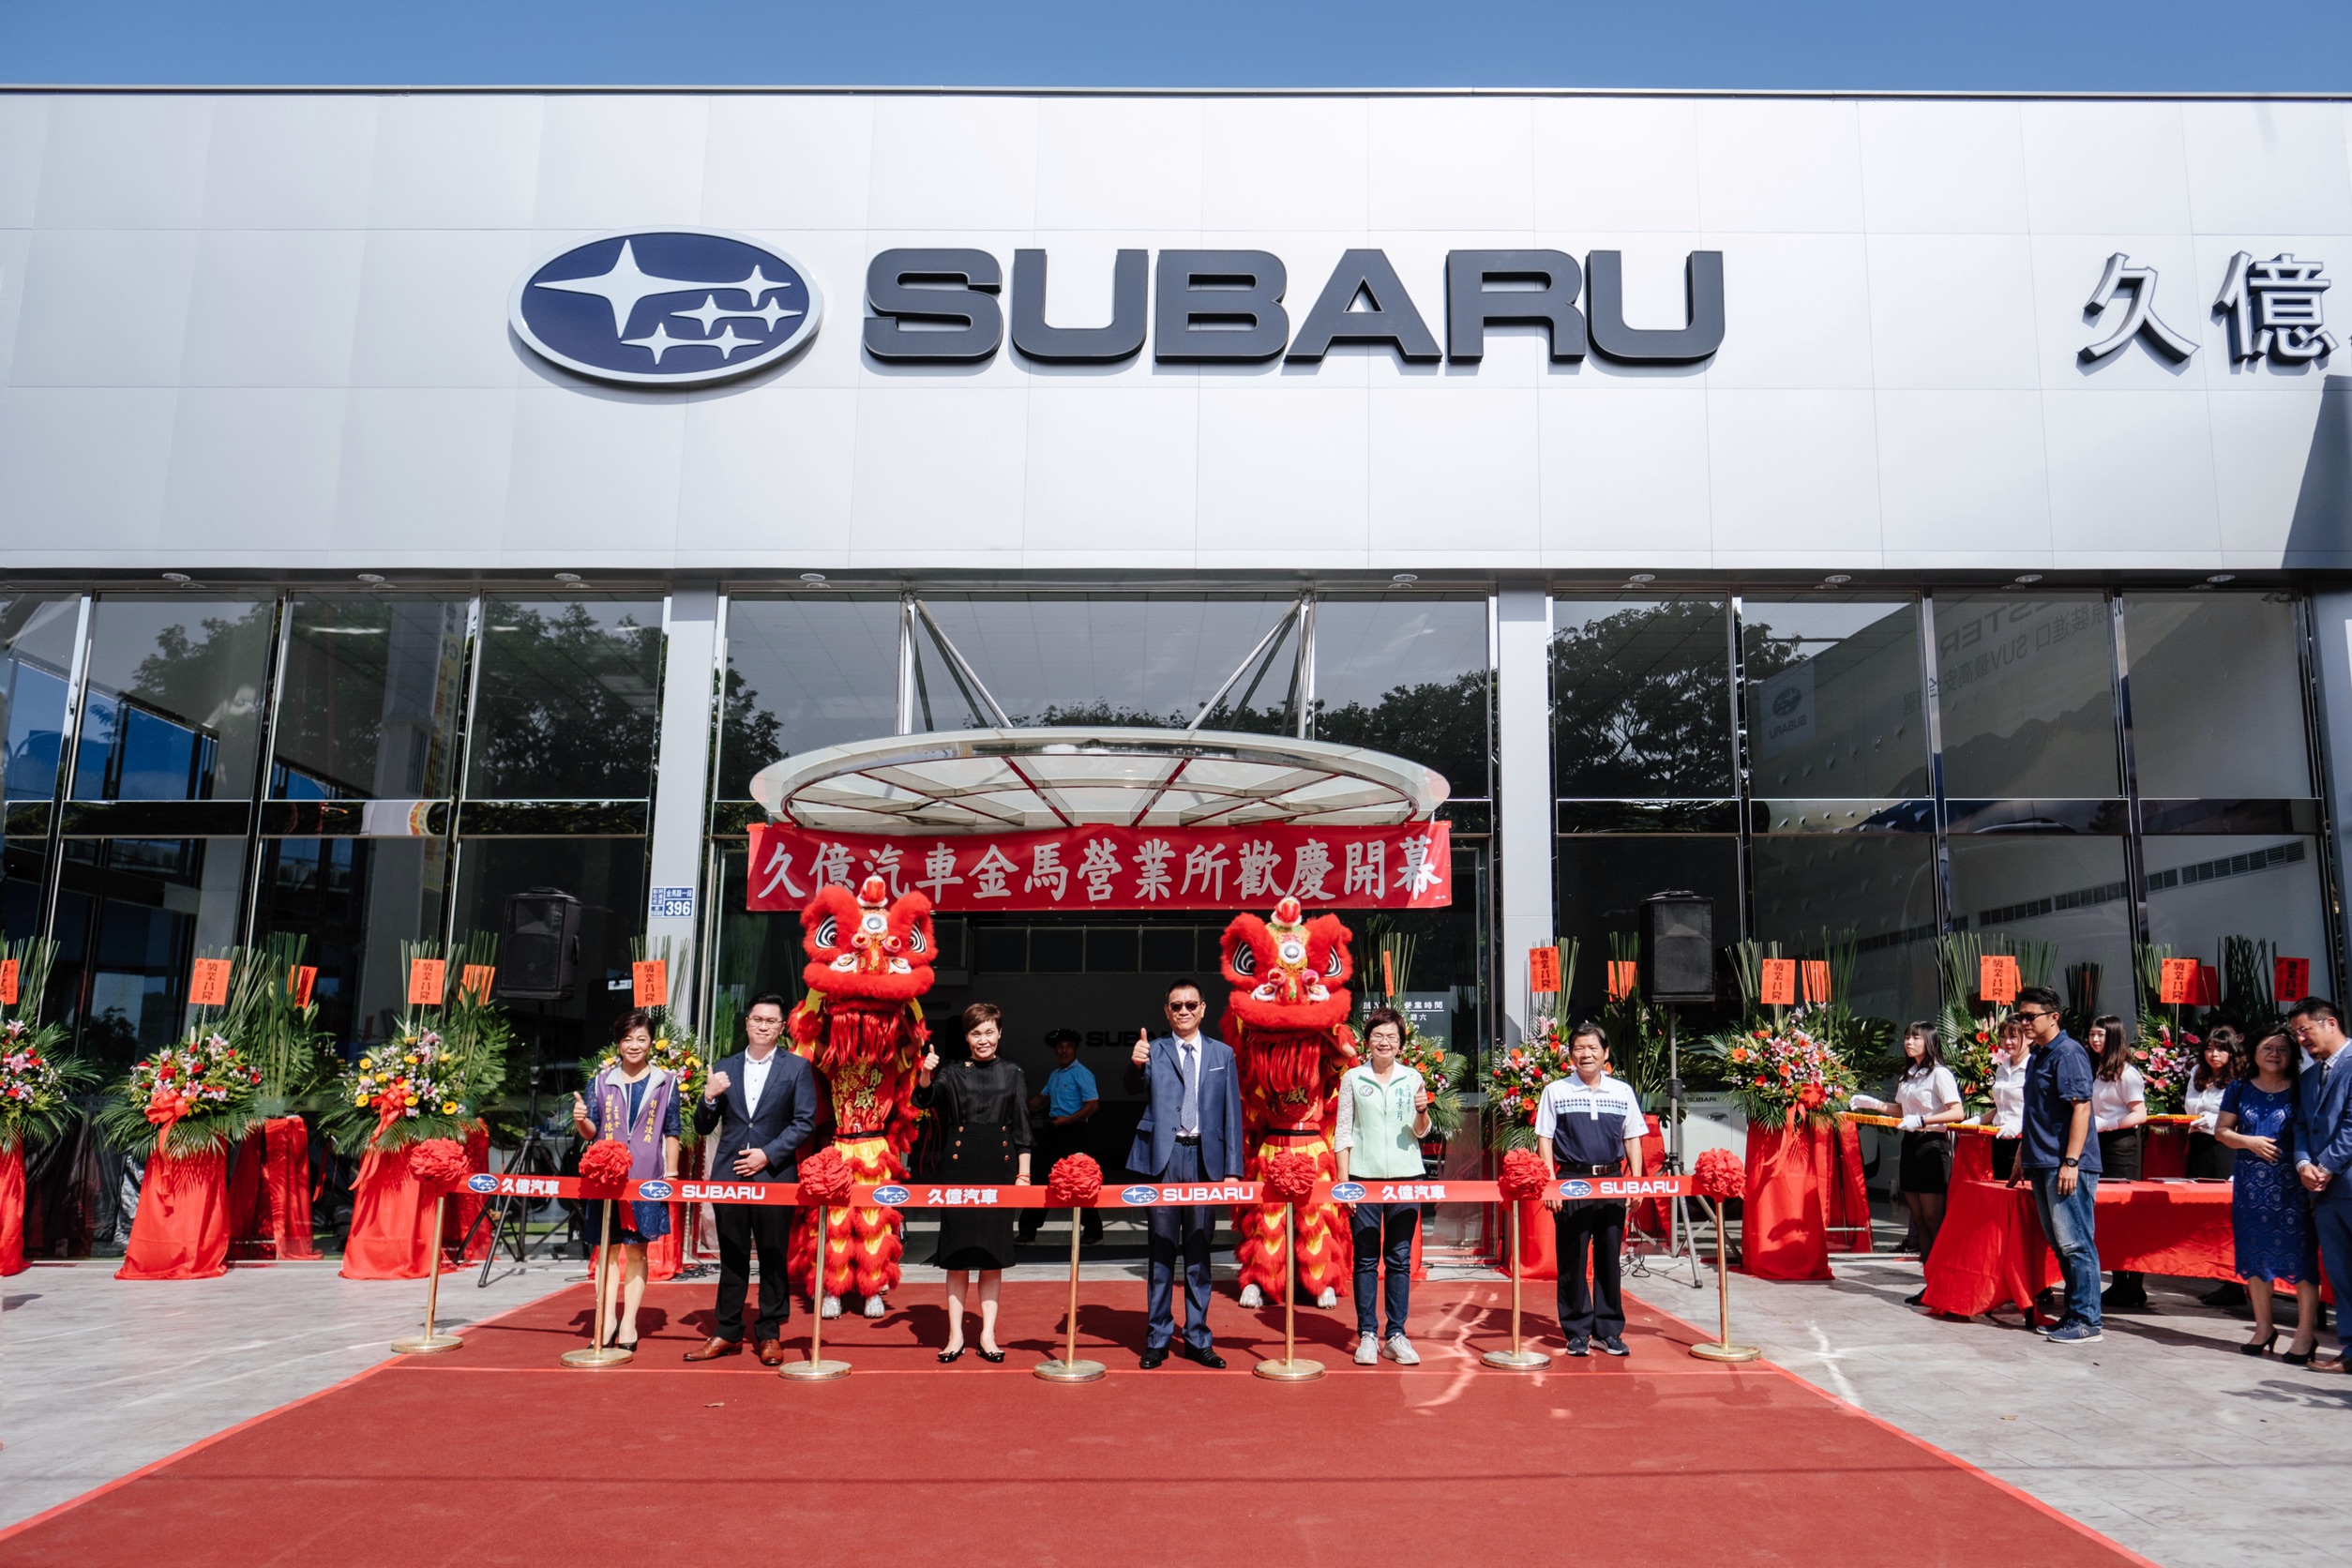 Subaru 台灣意美汽車董事總經理方淑霞女士（左三）親自出席開幕剪裁儀式。